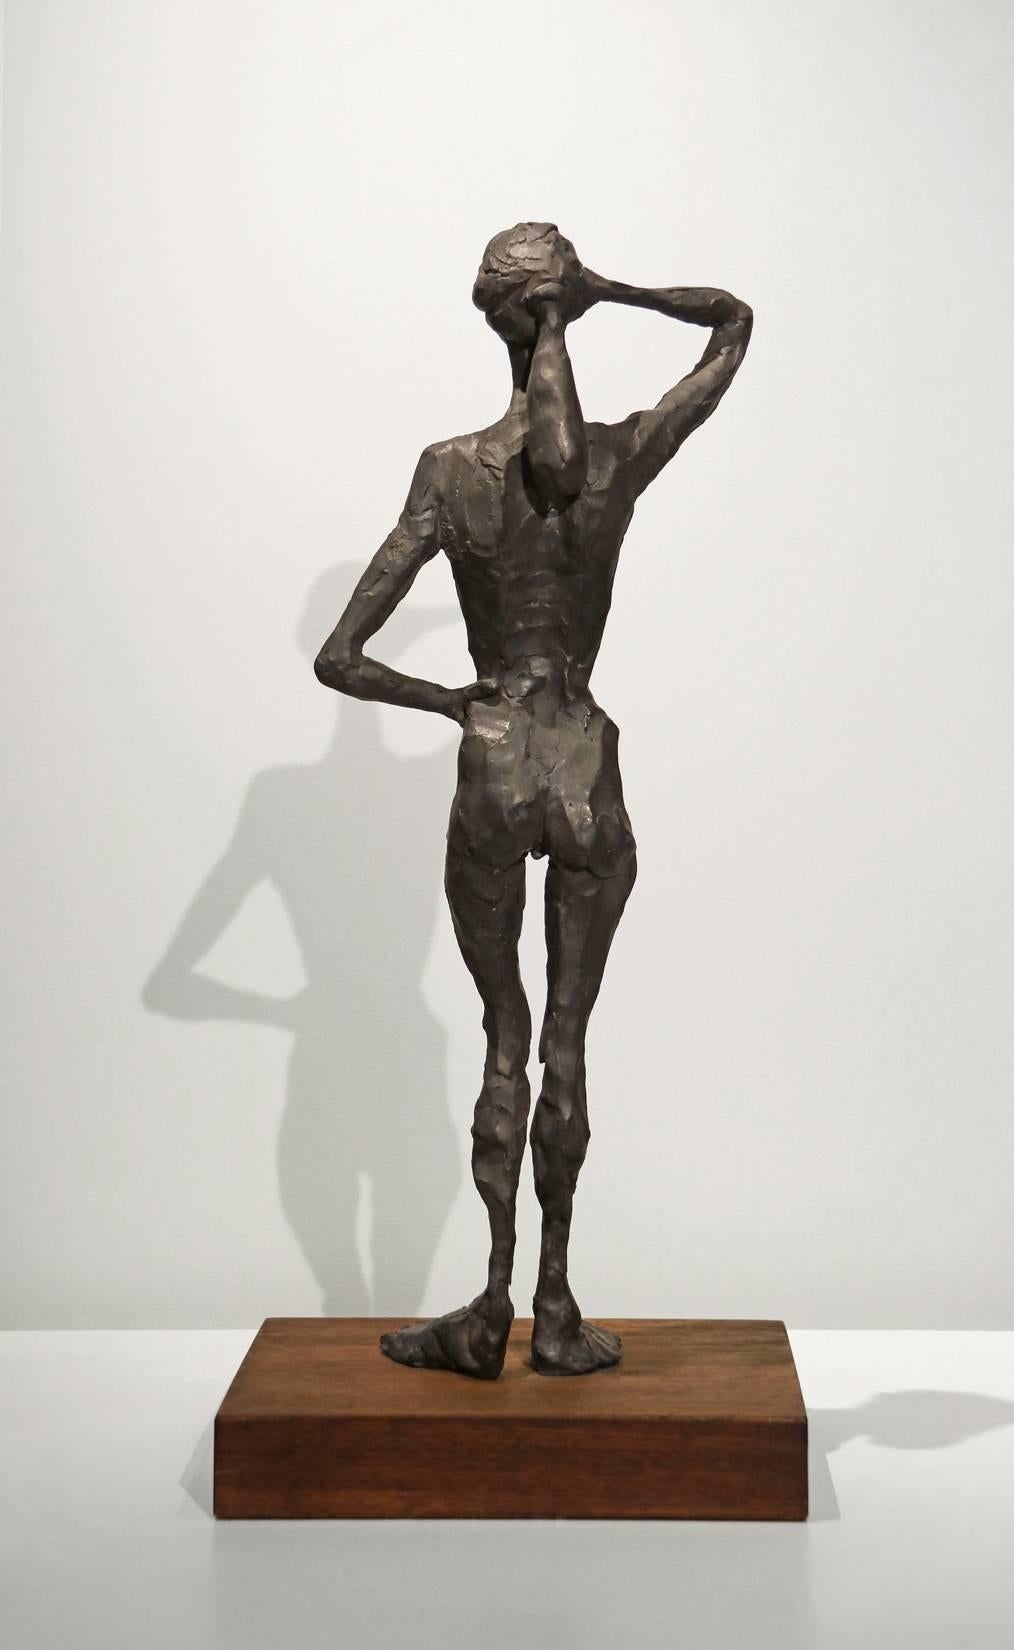 Pamela debout - Marron Figurative Sculpture par Curt Brill